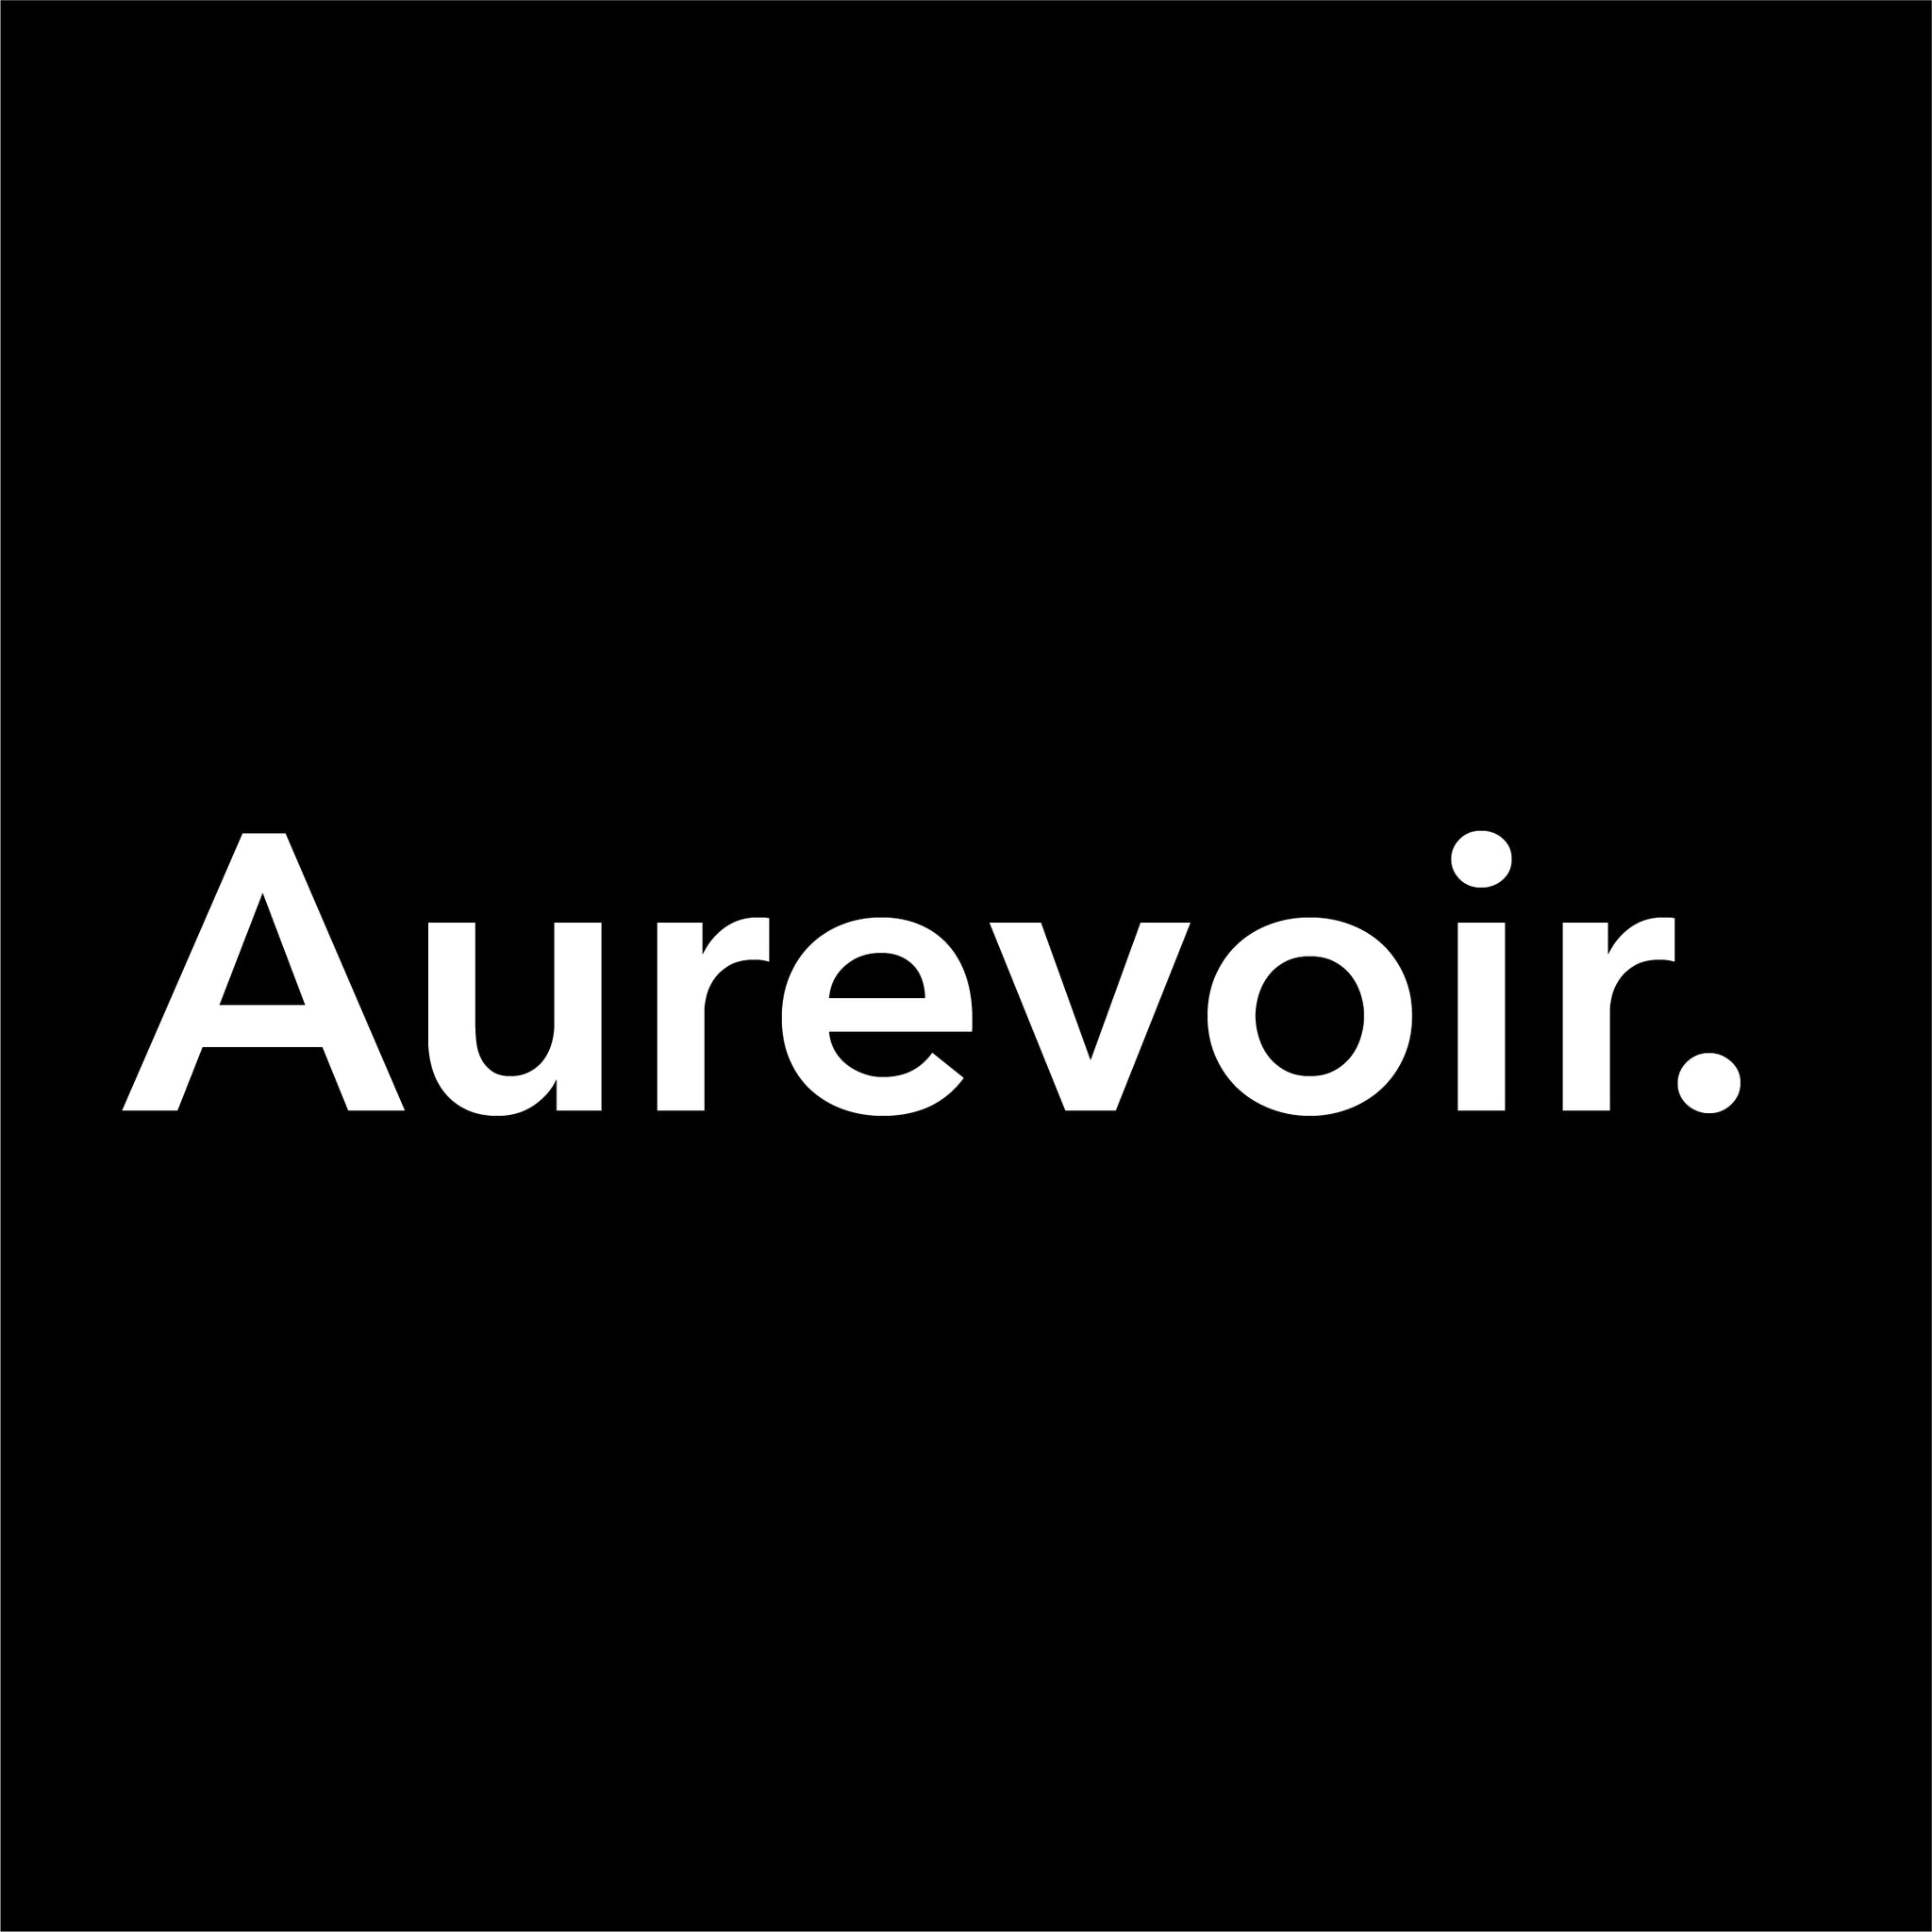 Aurevoir.